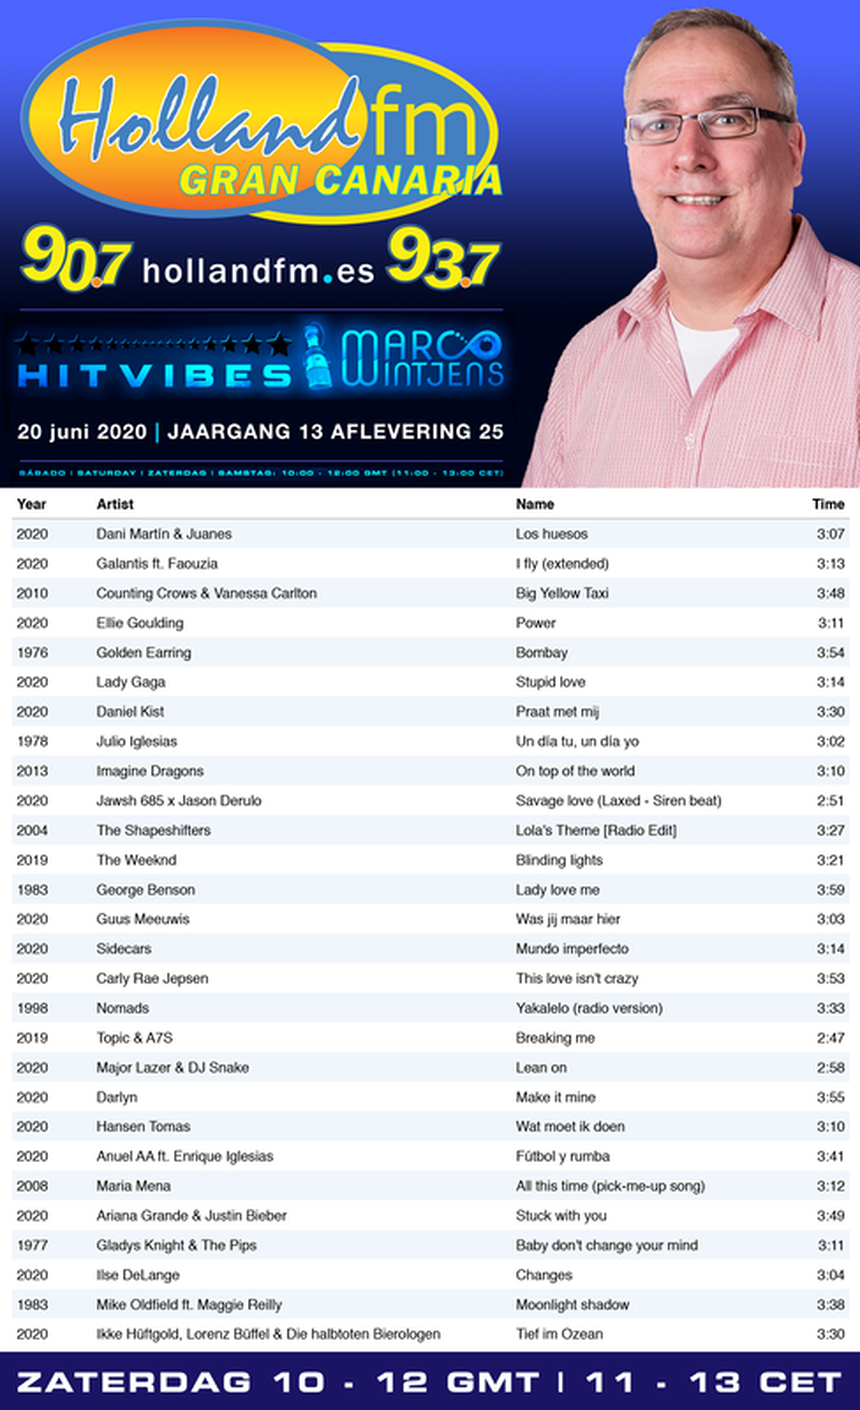 Playlist, HitVibes, Gran Canaria, zaterdag, 20-06-2020, Marco Wintjens, Holland FM